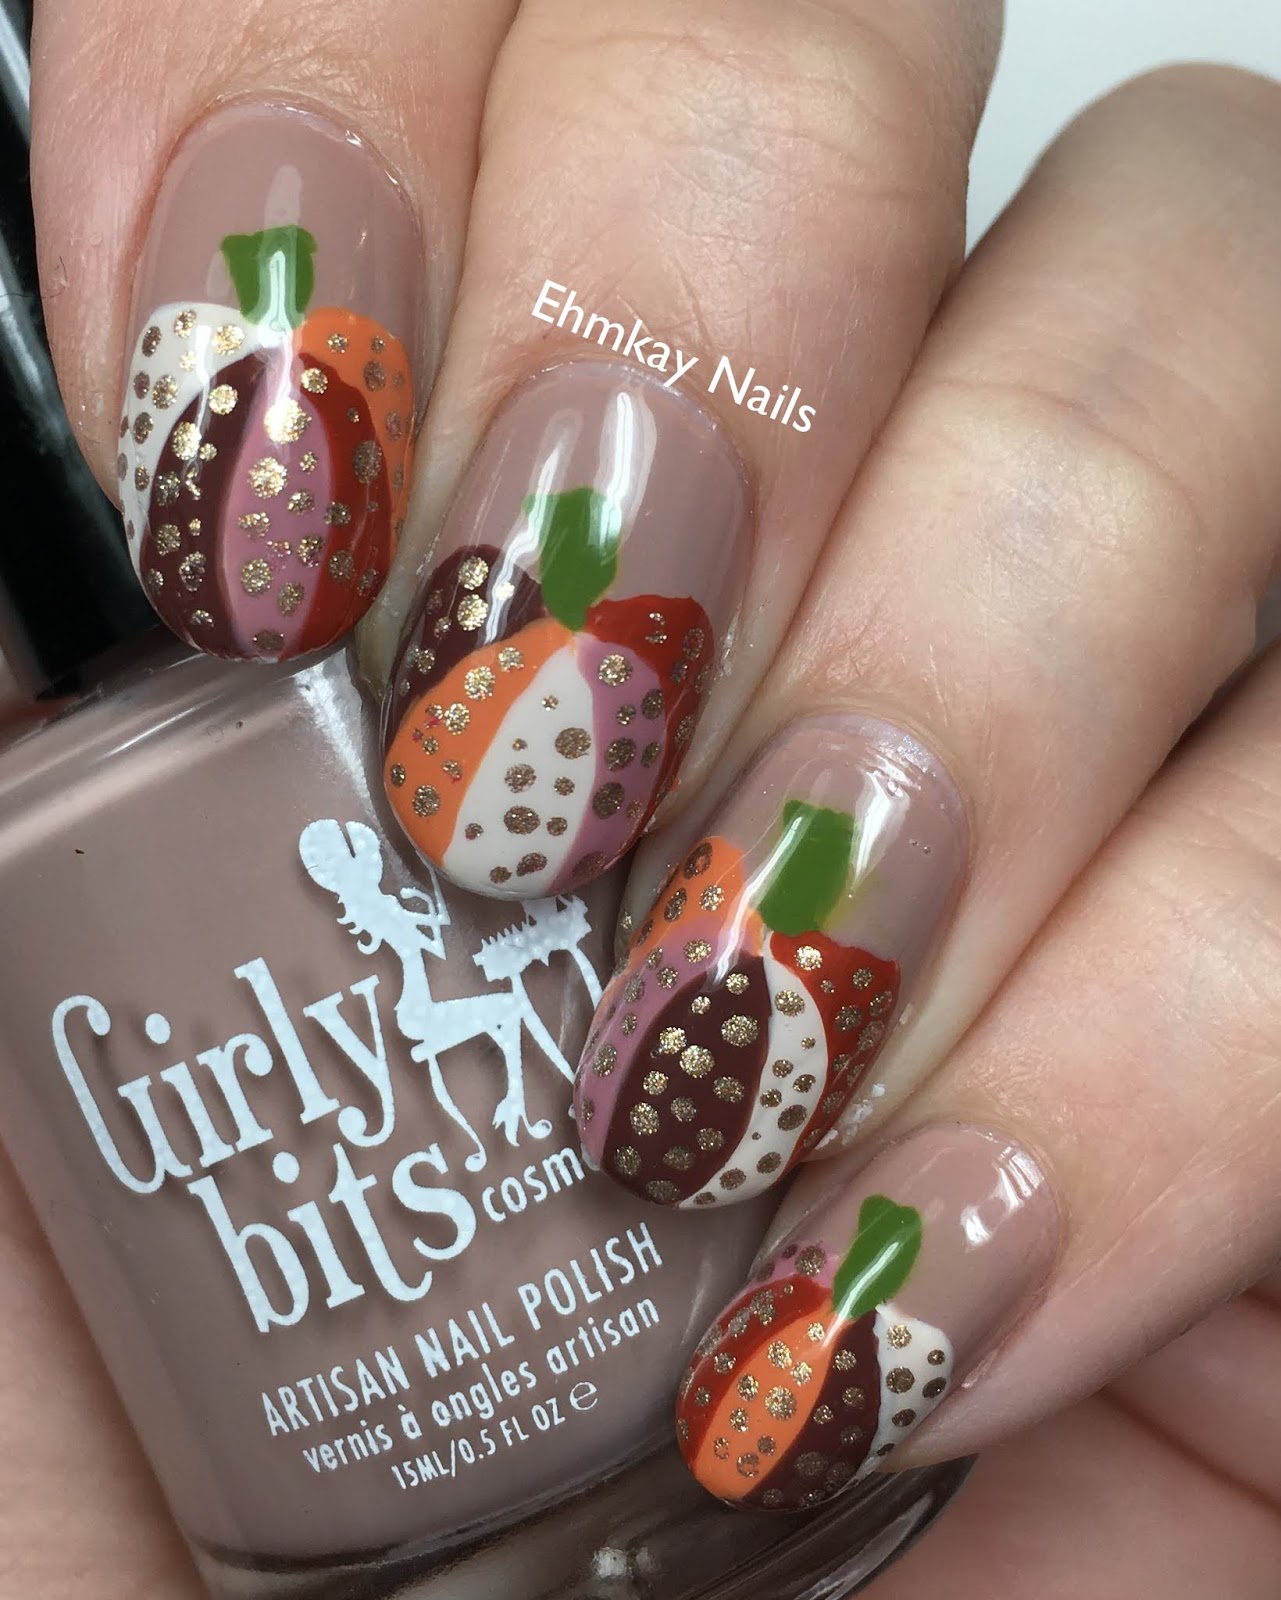 ehmkay nails: Thanksgiving Autumn Pumpkins Nail Art